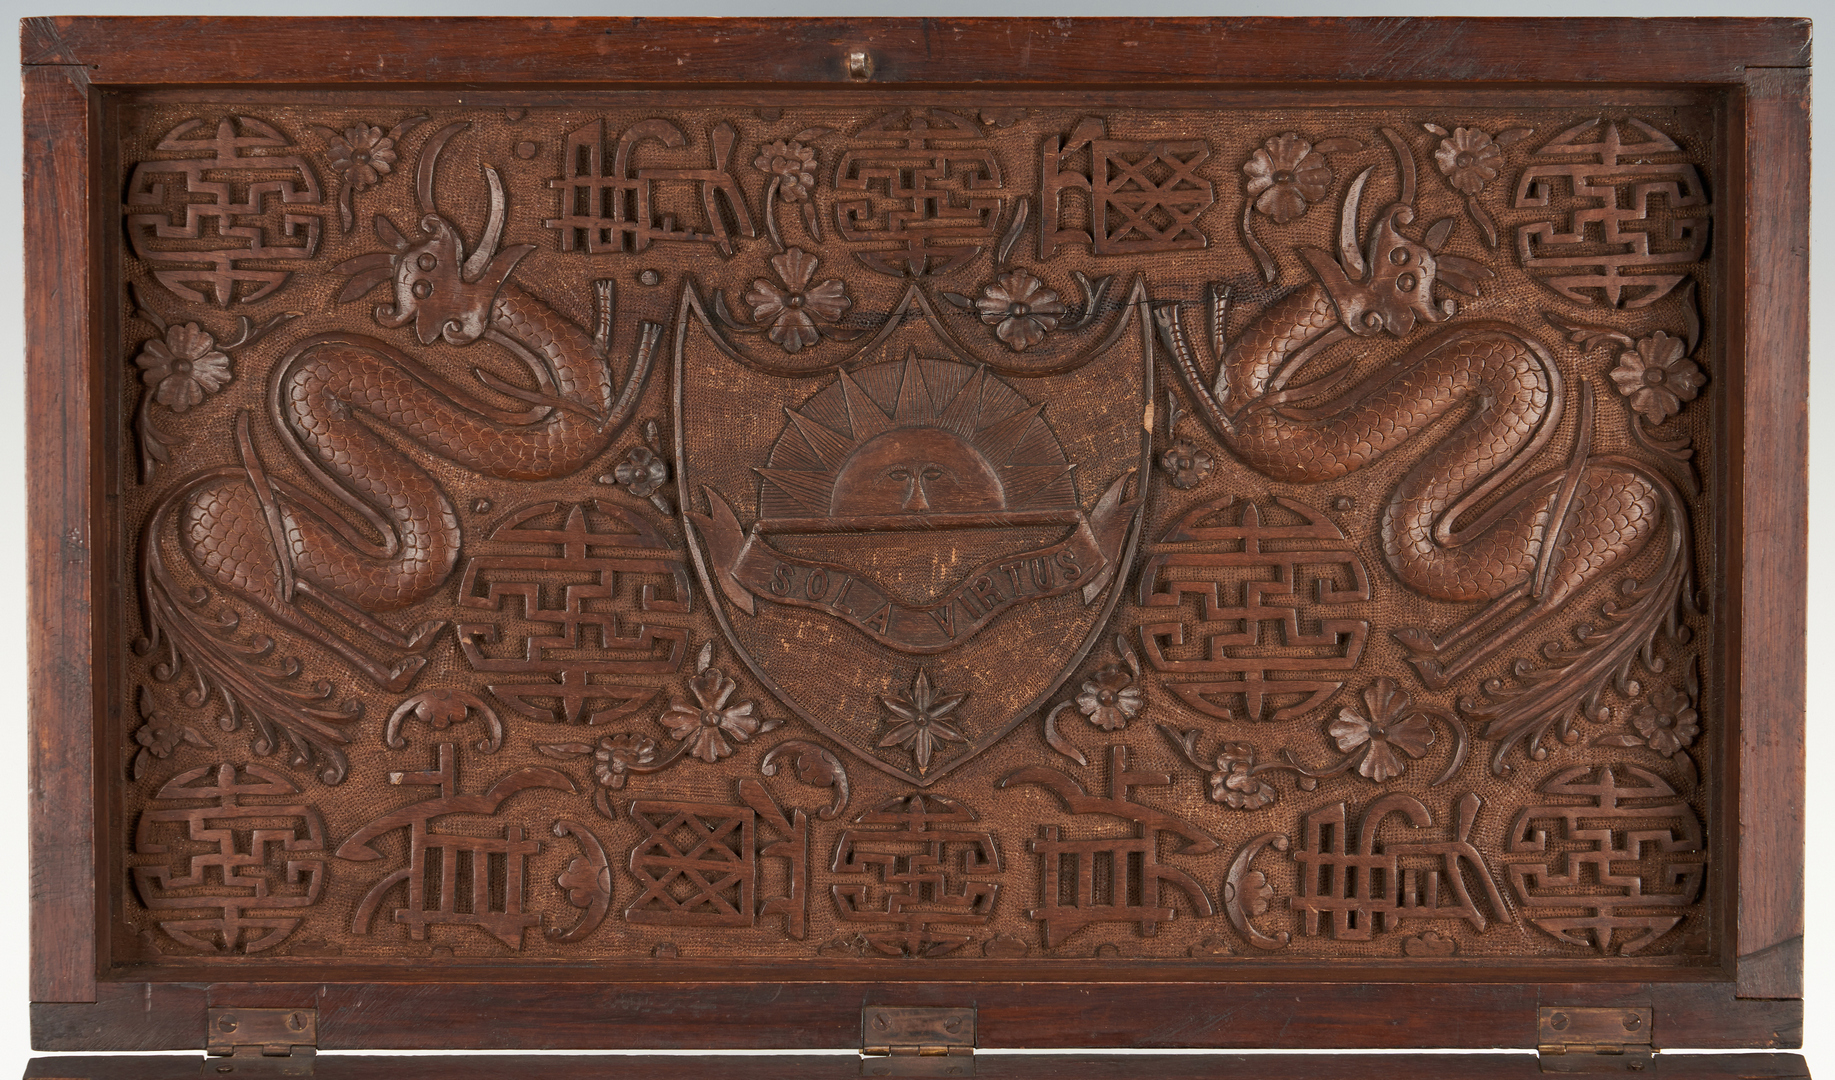 Lot 8: Chinese Carved Hardwood Dragon Box